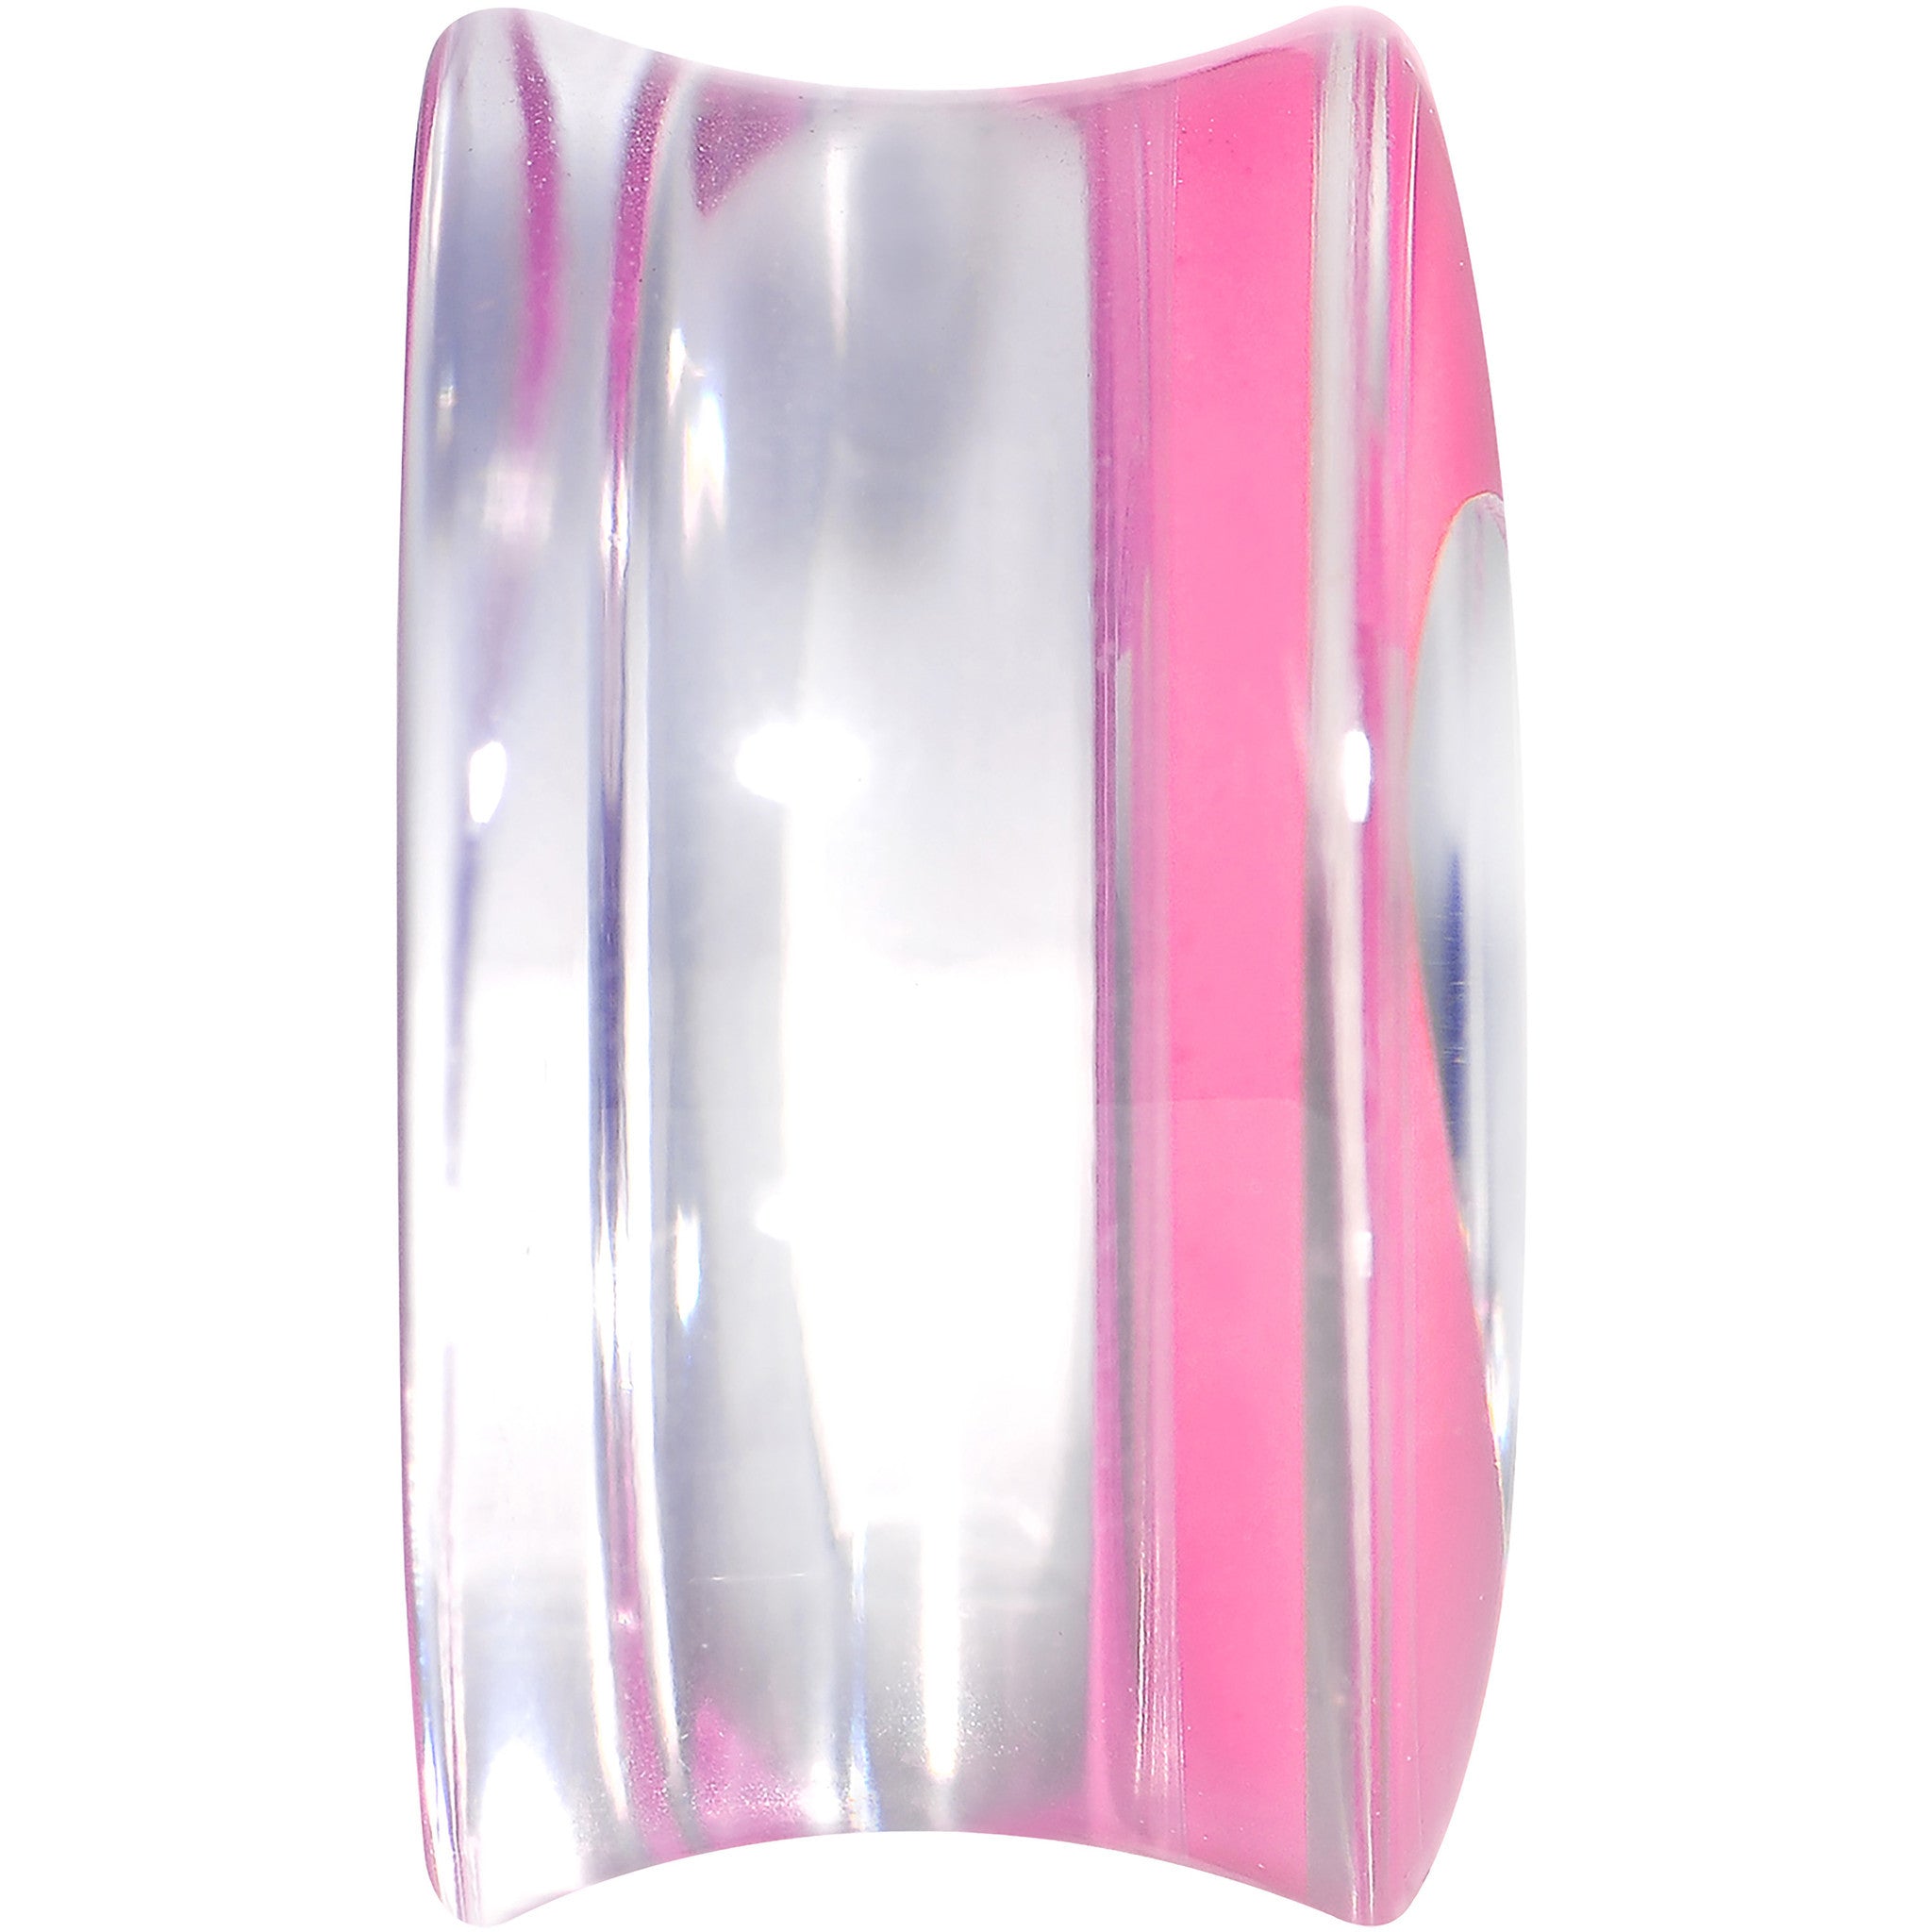 18mm Clear Pink Acrylic Adoring Heart Saddle Plug